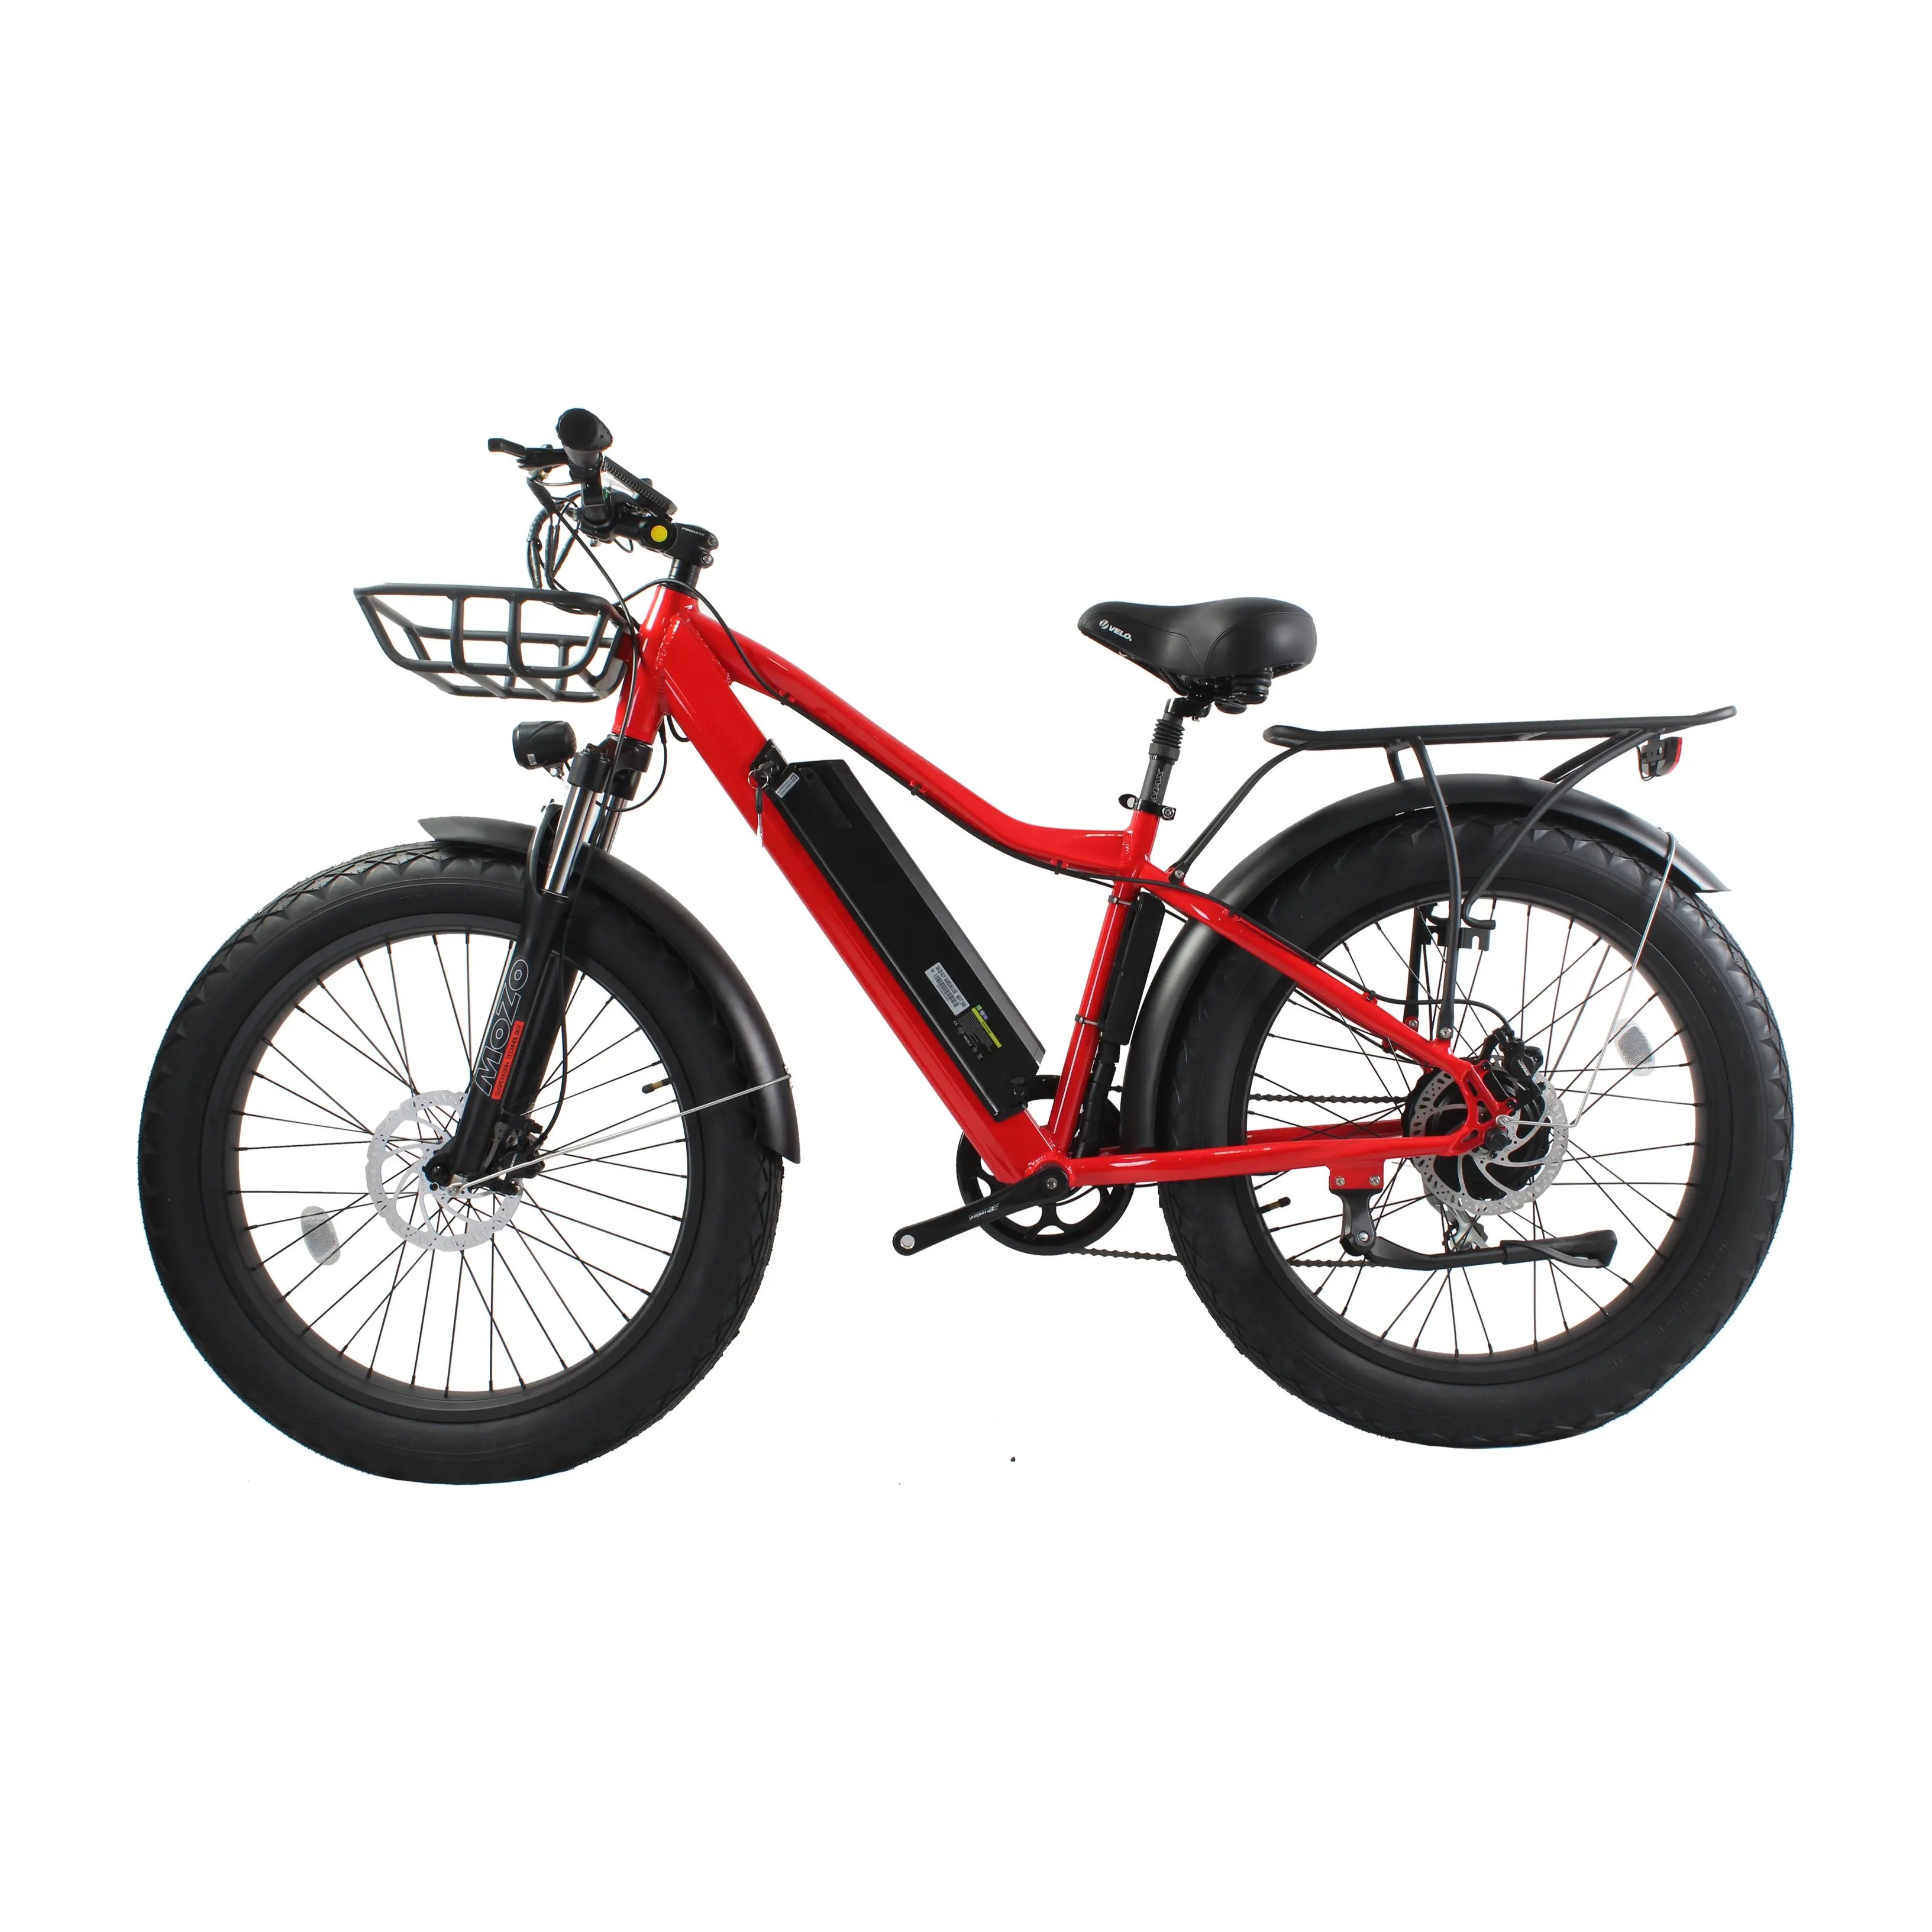 Pedal bicicleta elétrica destekli ����bicores et, 1000w, 48v